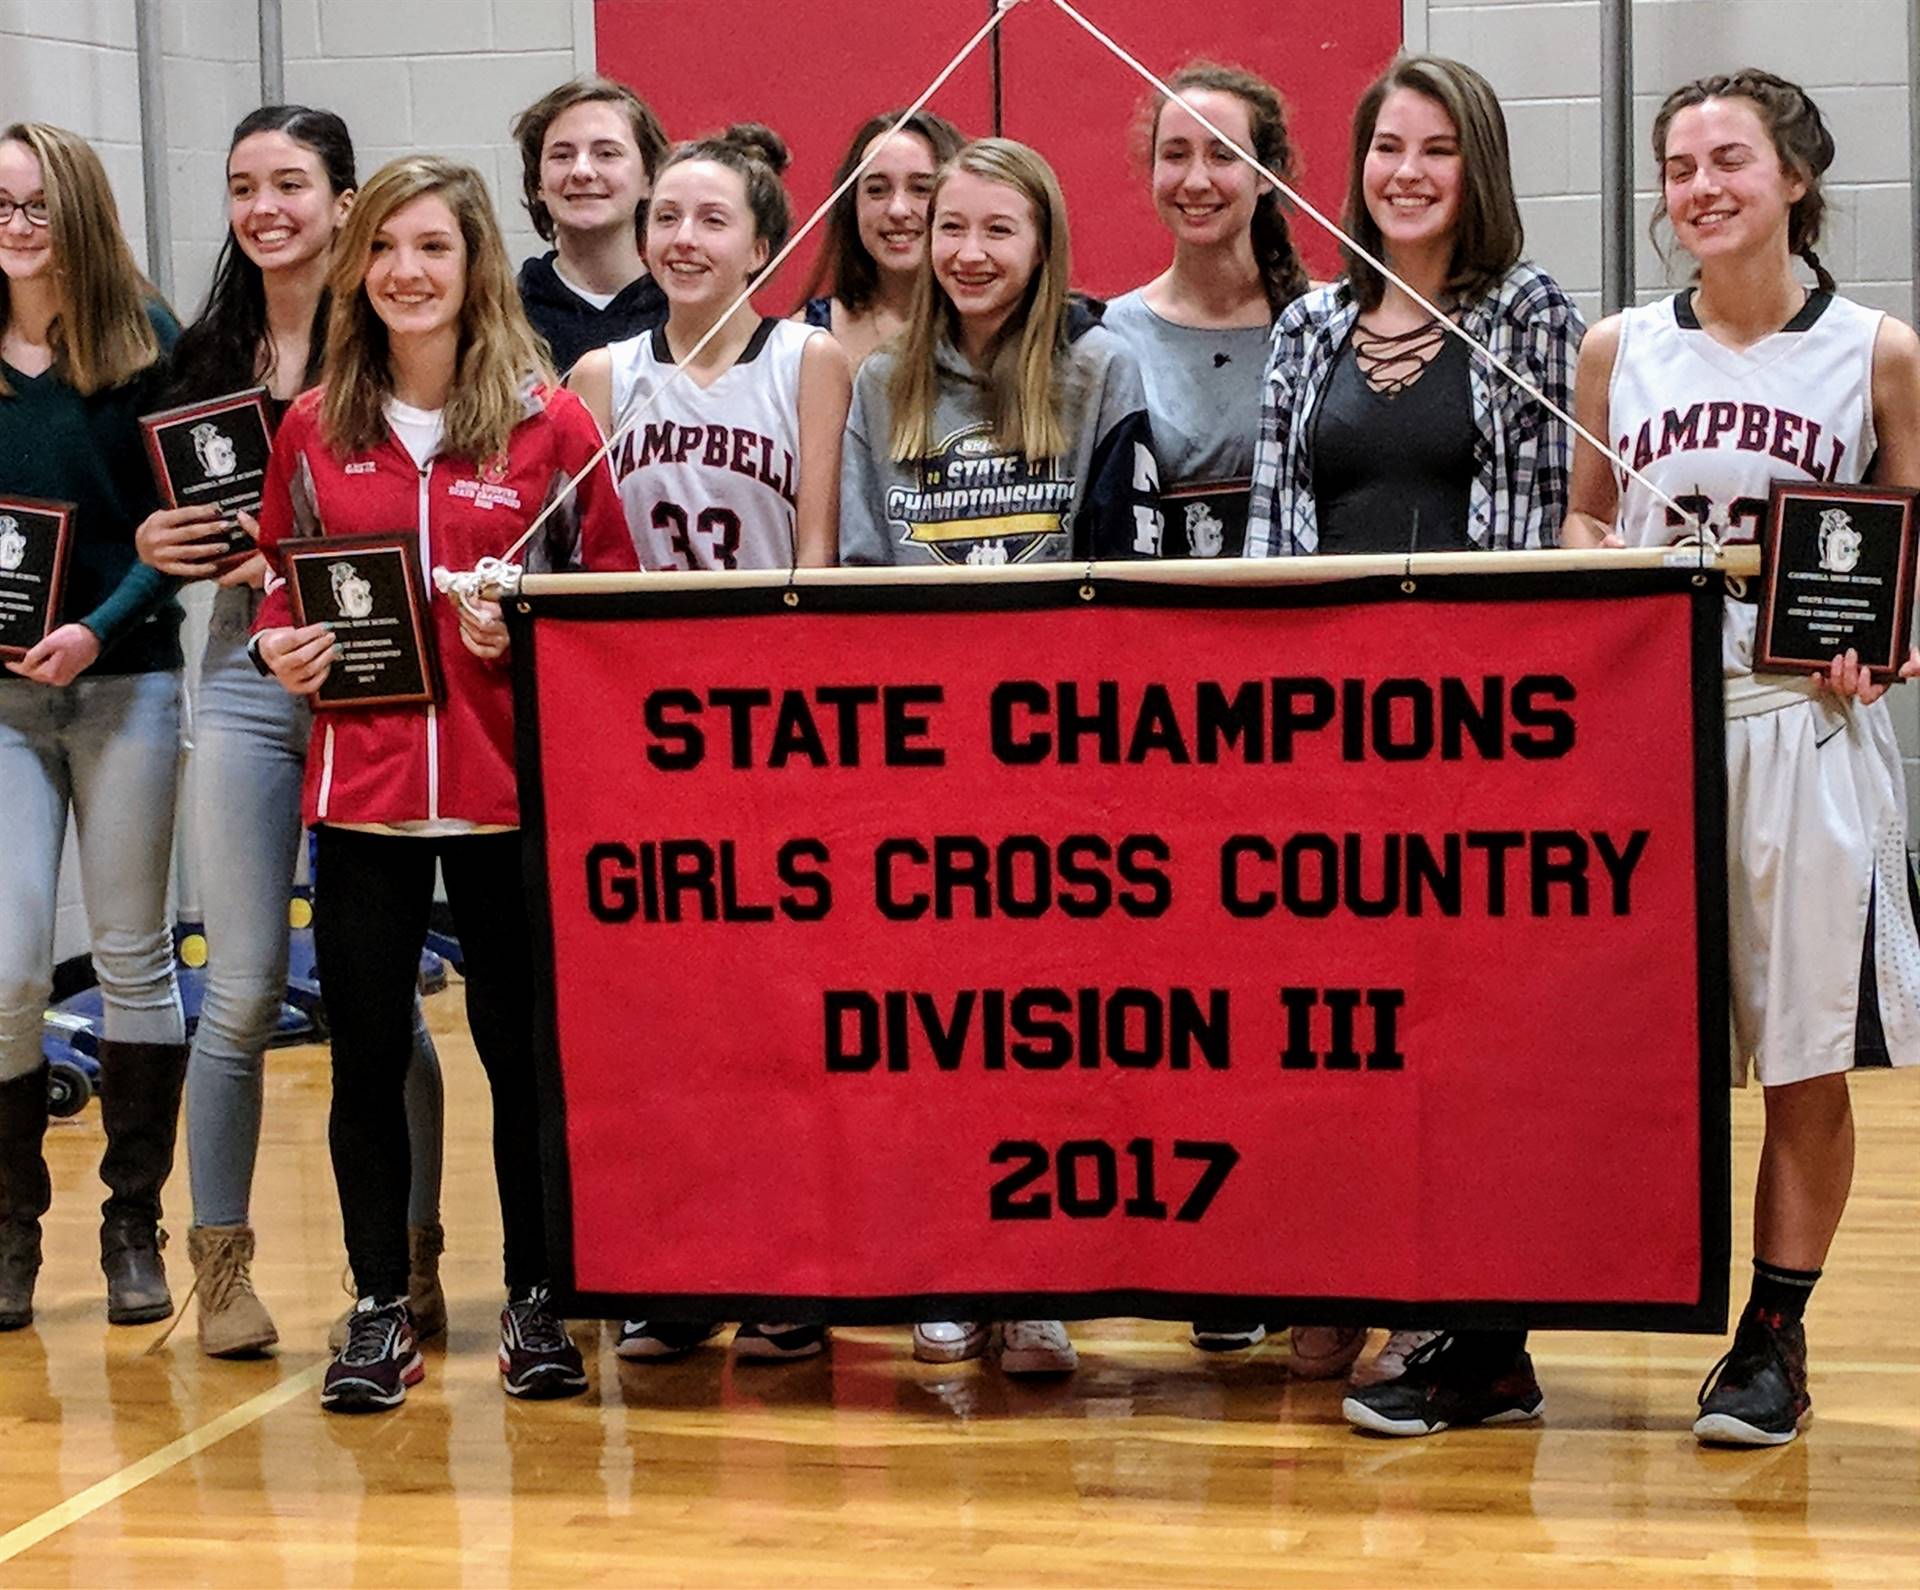 Raising the Girls Cross Country 2017 State Champion banner